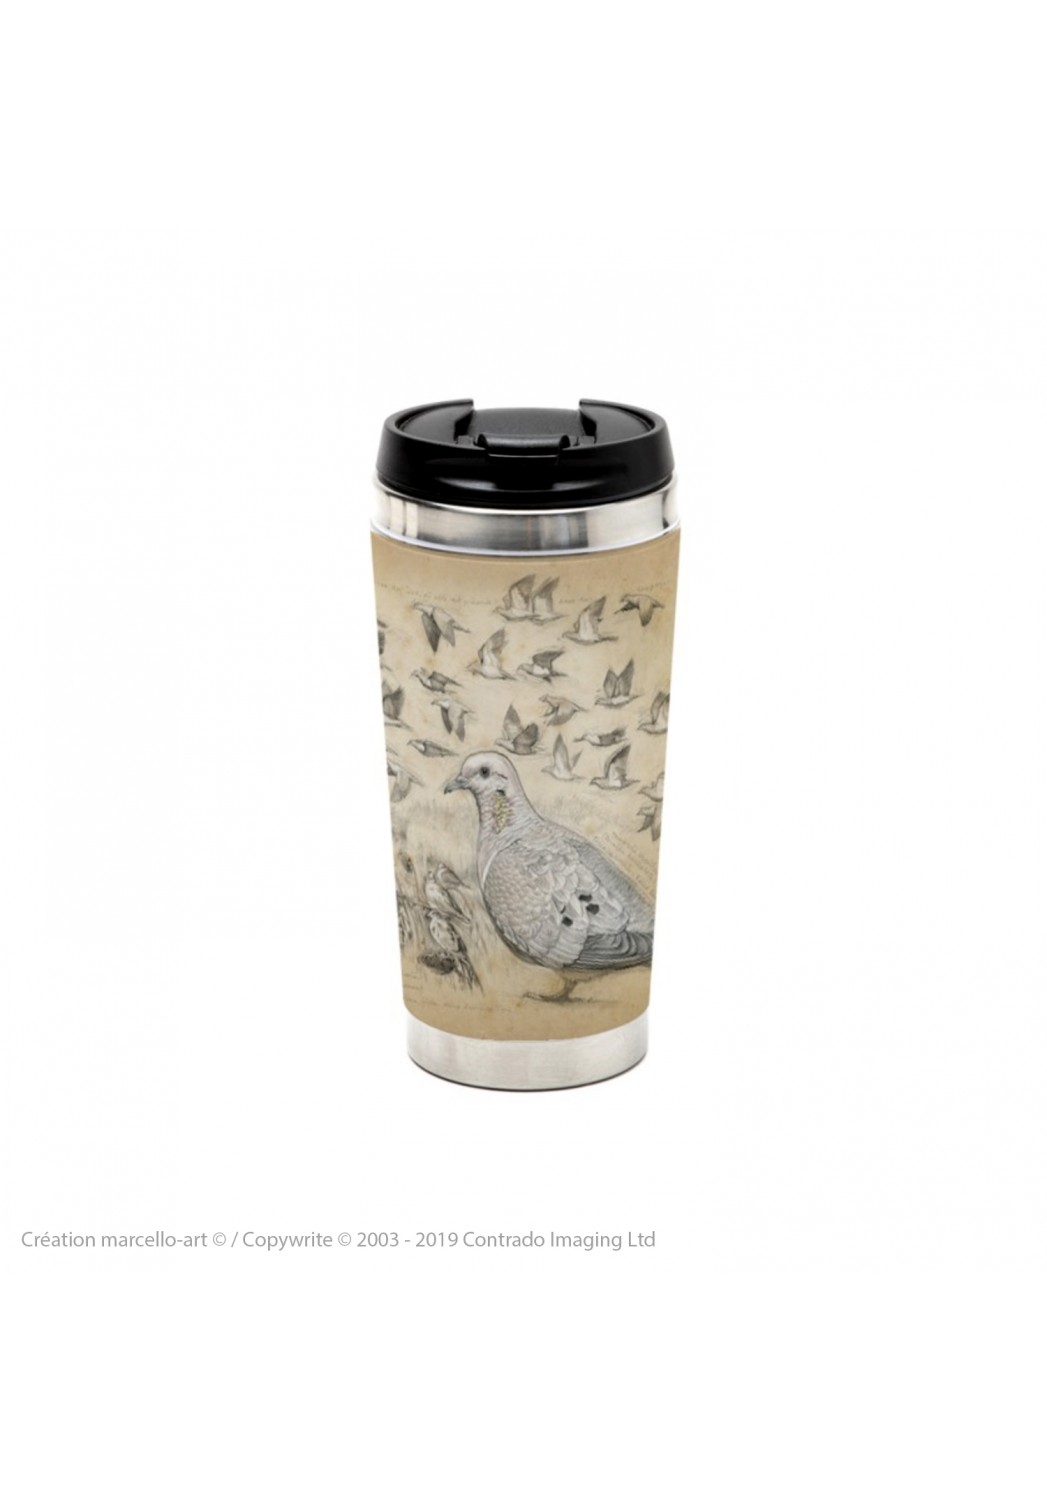 Marcello-art: Decoration accessoiries Thermos mug 231 Eared Dove